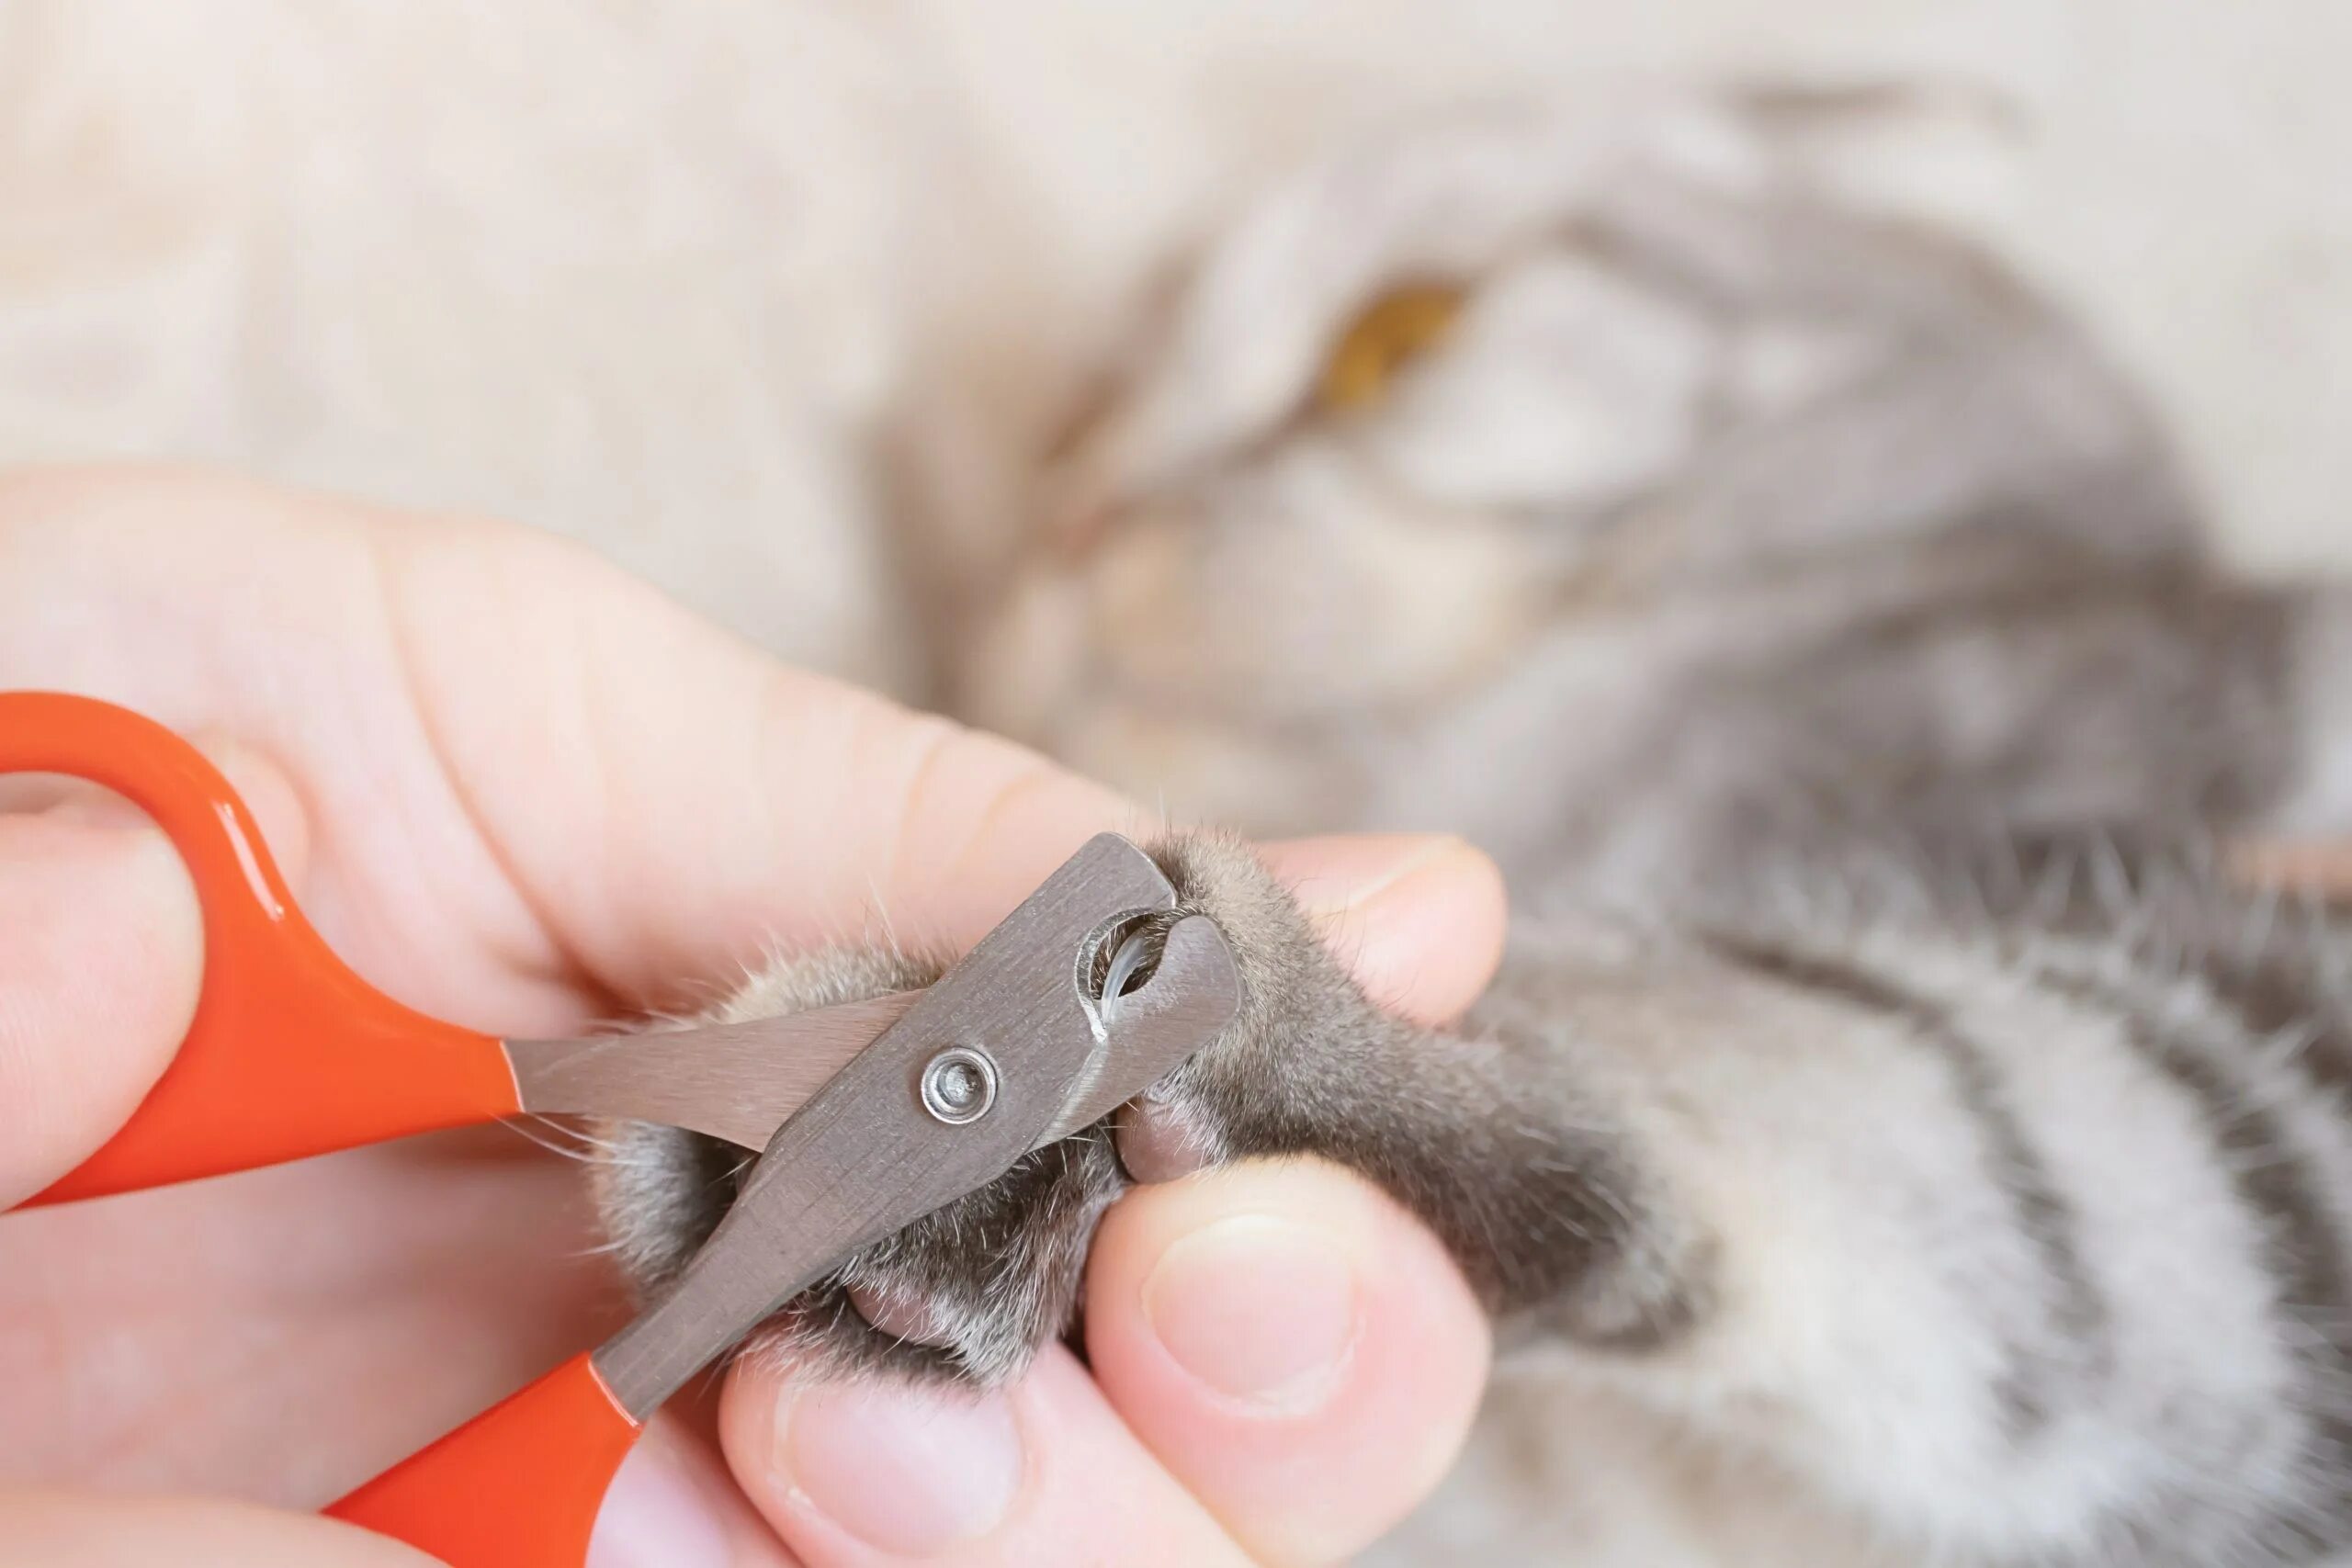 Подстричь когти кошке в домашних условиях когтерезкой